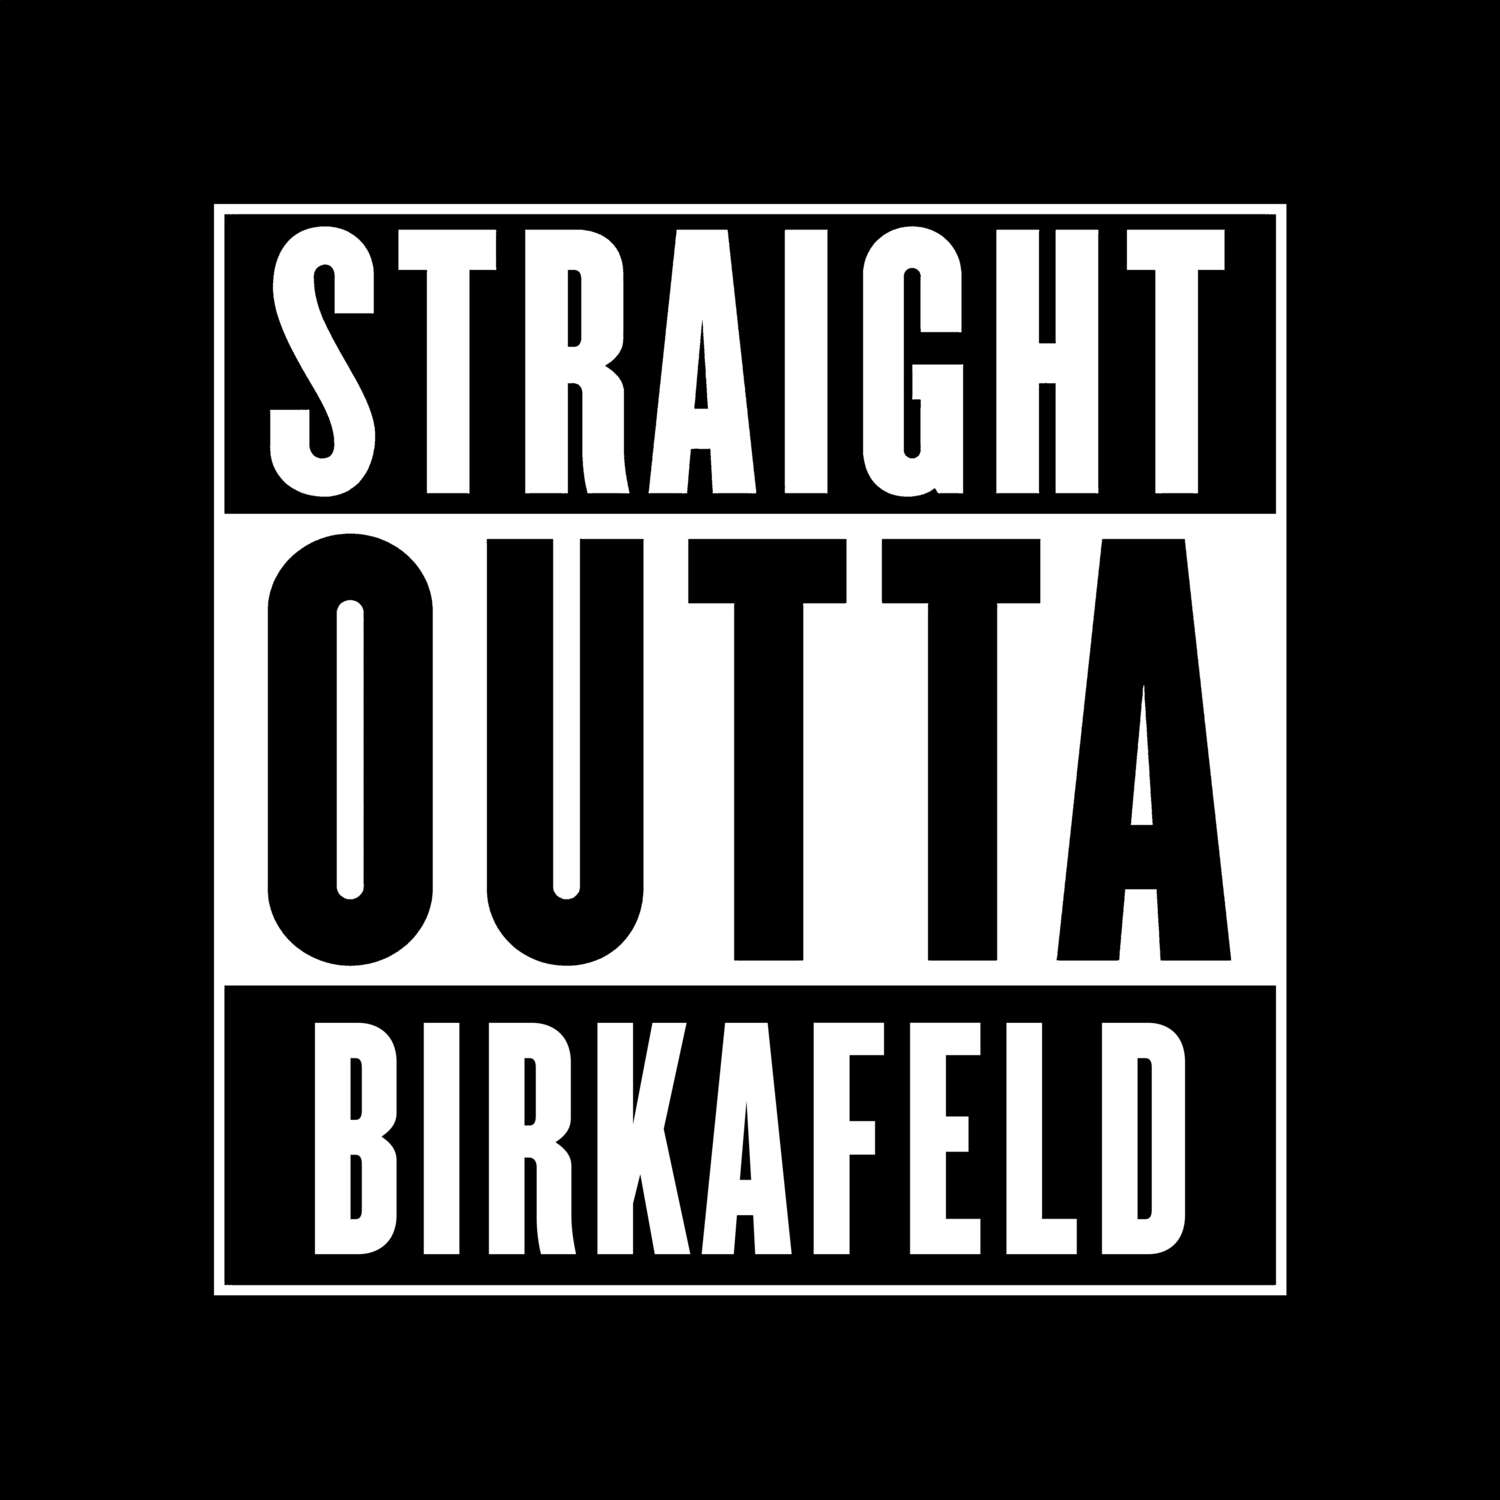 Birkafeld T-Shirt »Straight Outta«